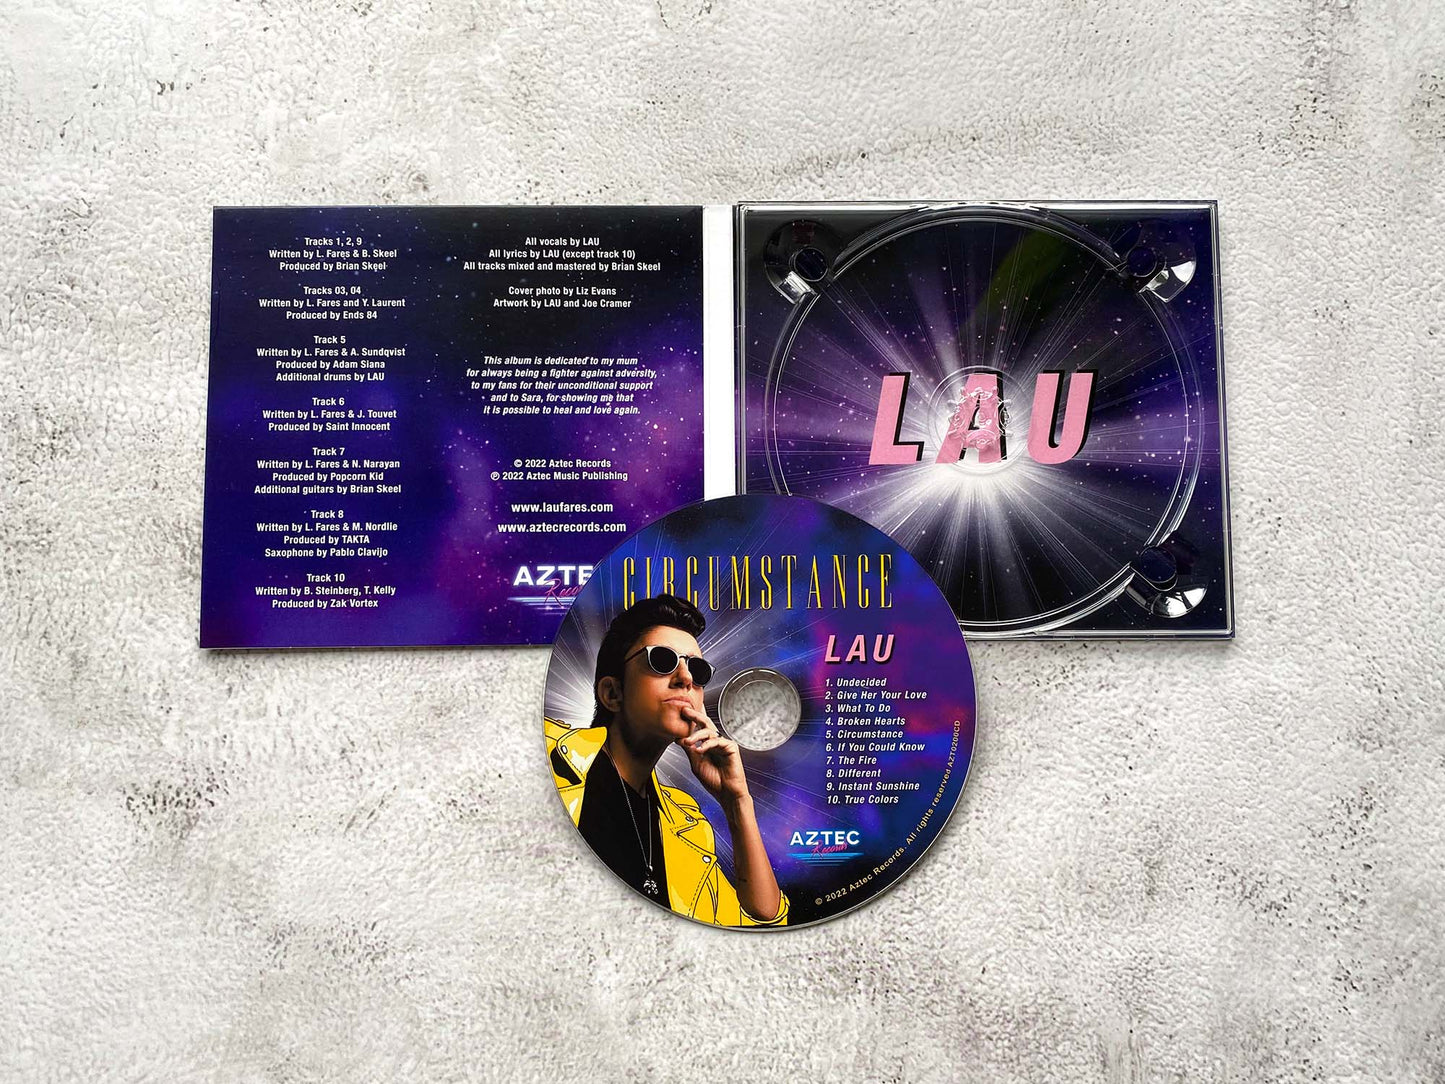 LAU - Circumstance - CD-R